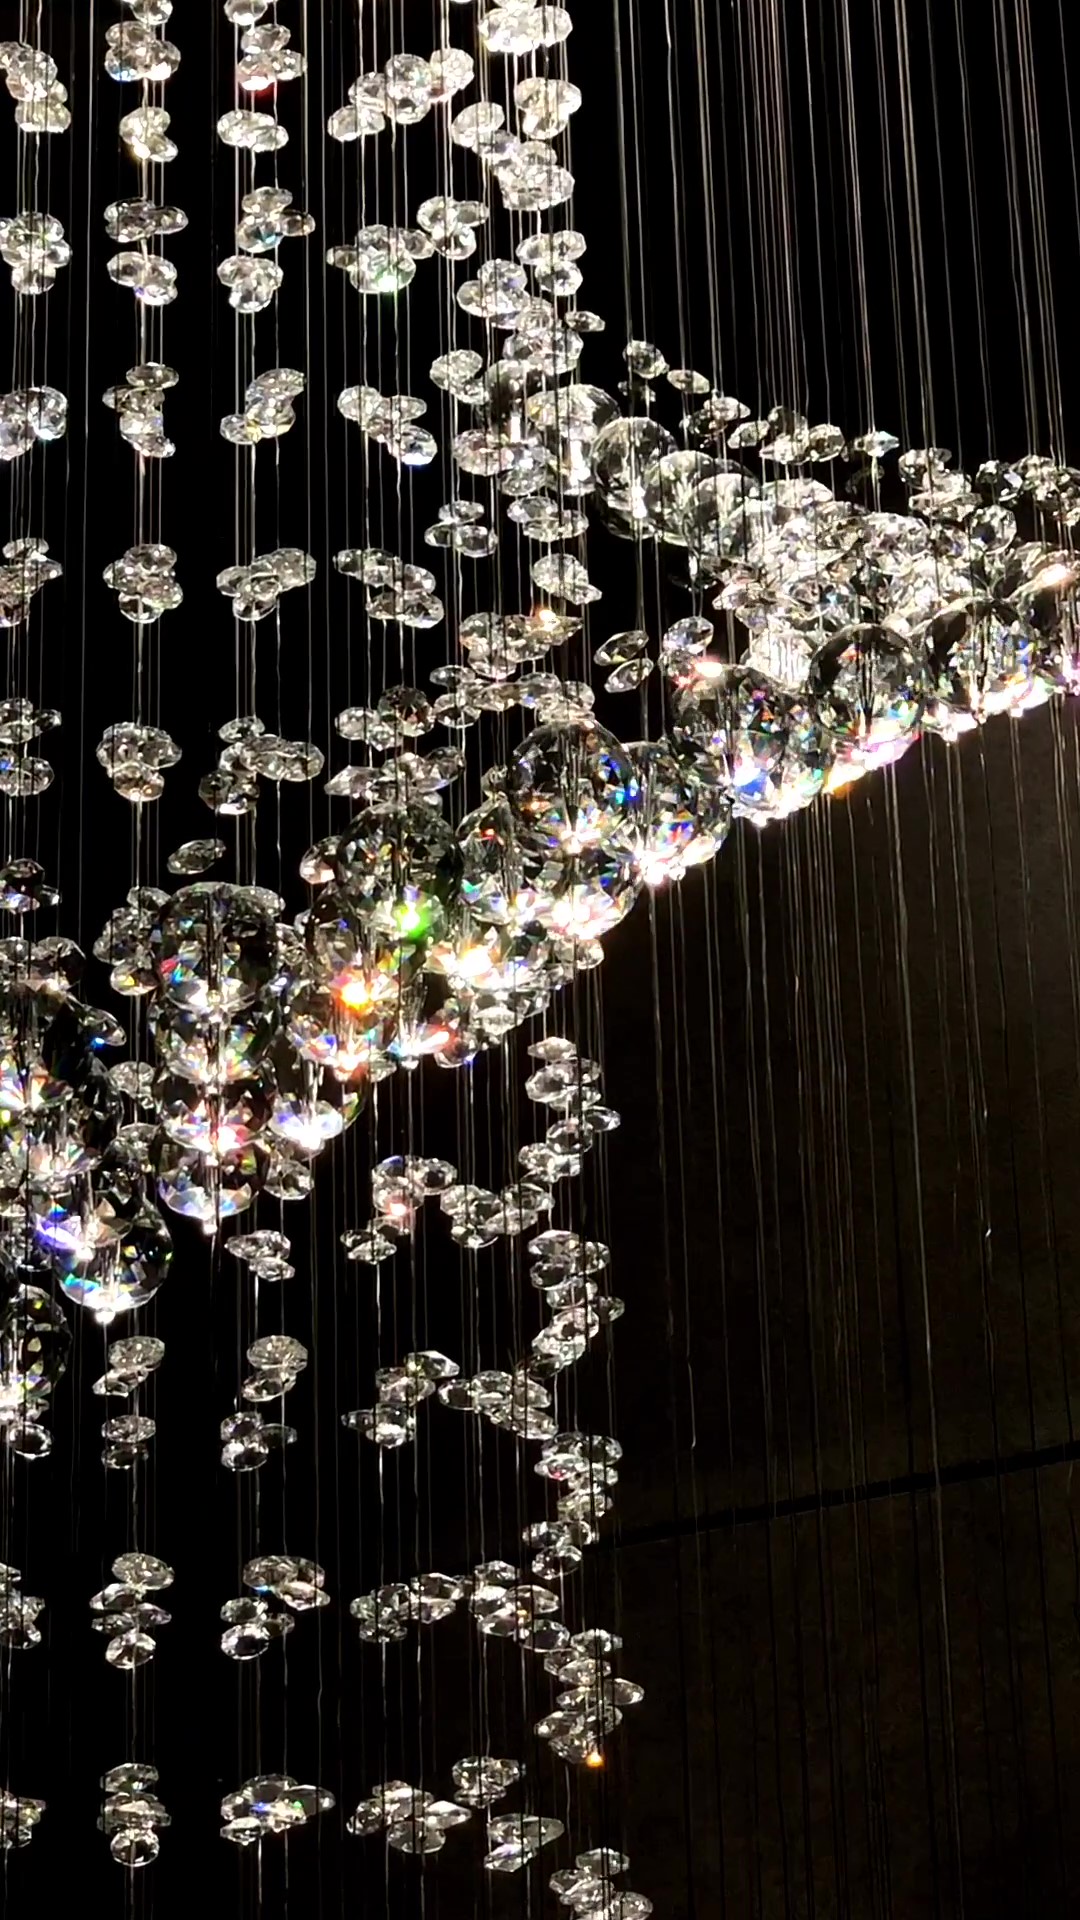 Stairwell Spiral Crystal Long Hanging Lamp Crystal Bead Chandelier Luxury Waterfall Pendant Lights